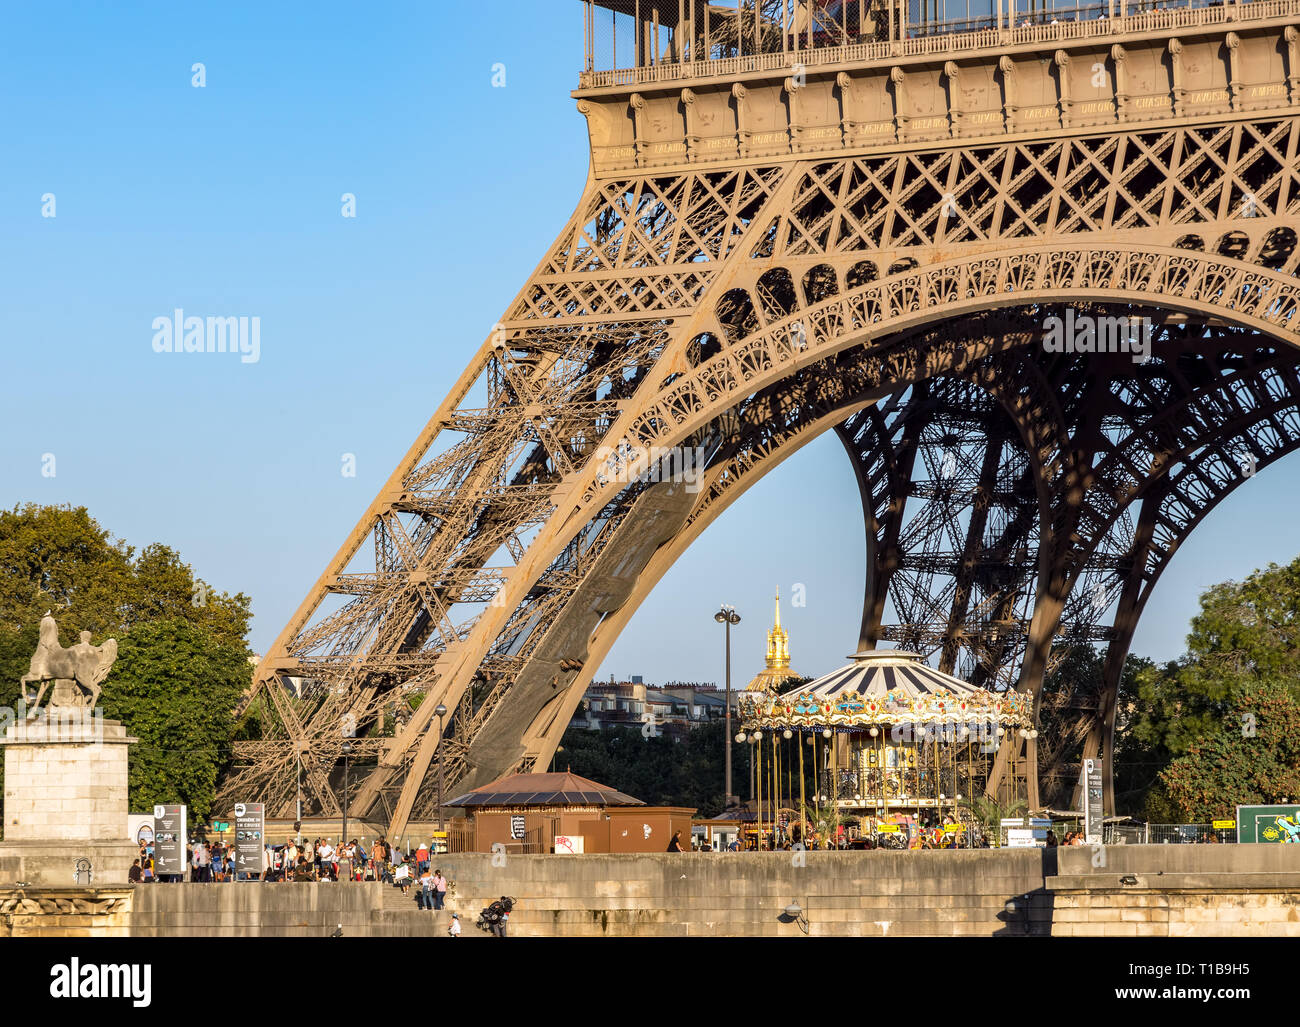 Eiffel tower and Seine river - Paris, France Stock Photo